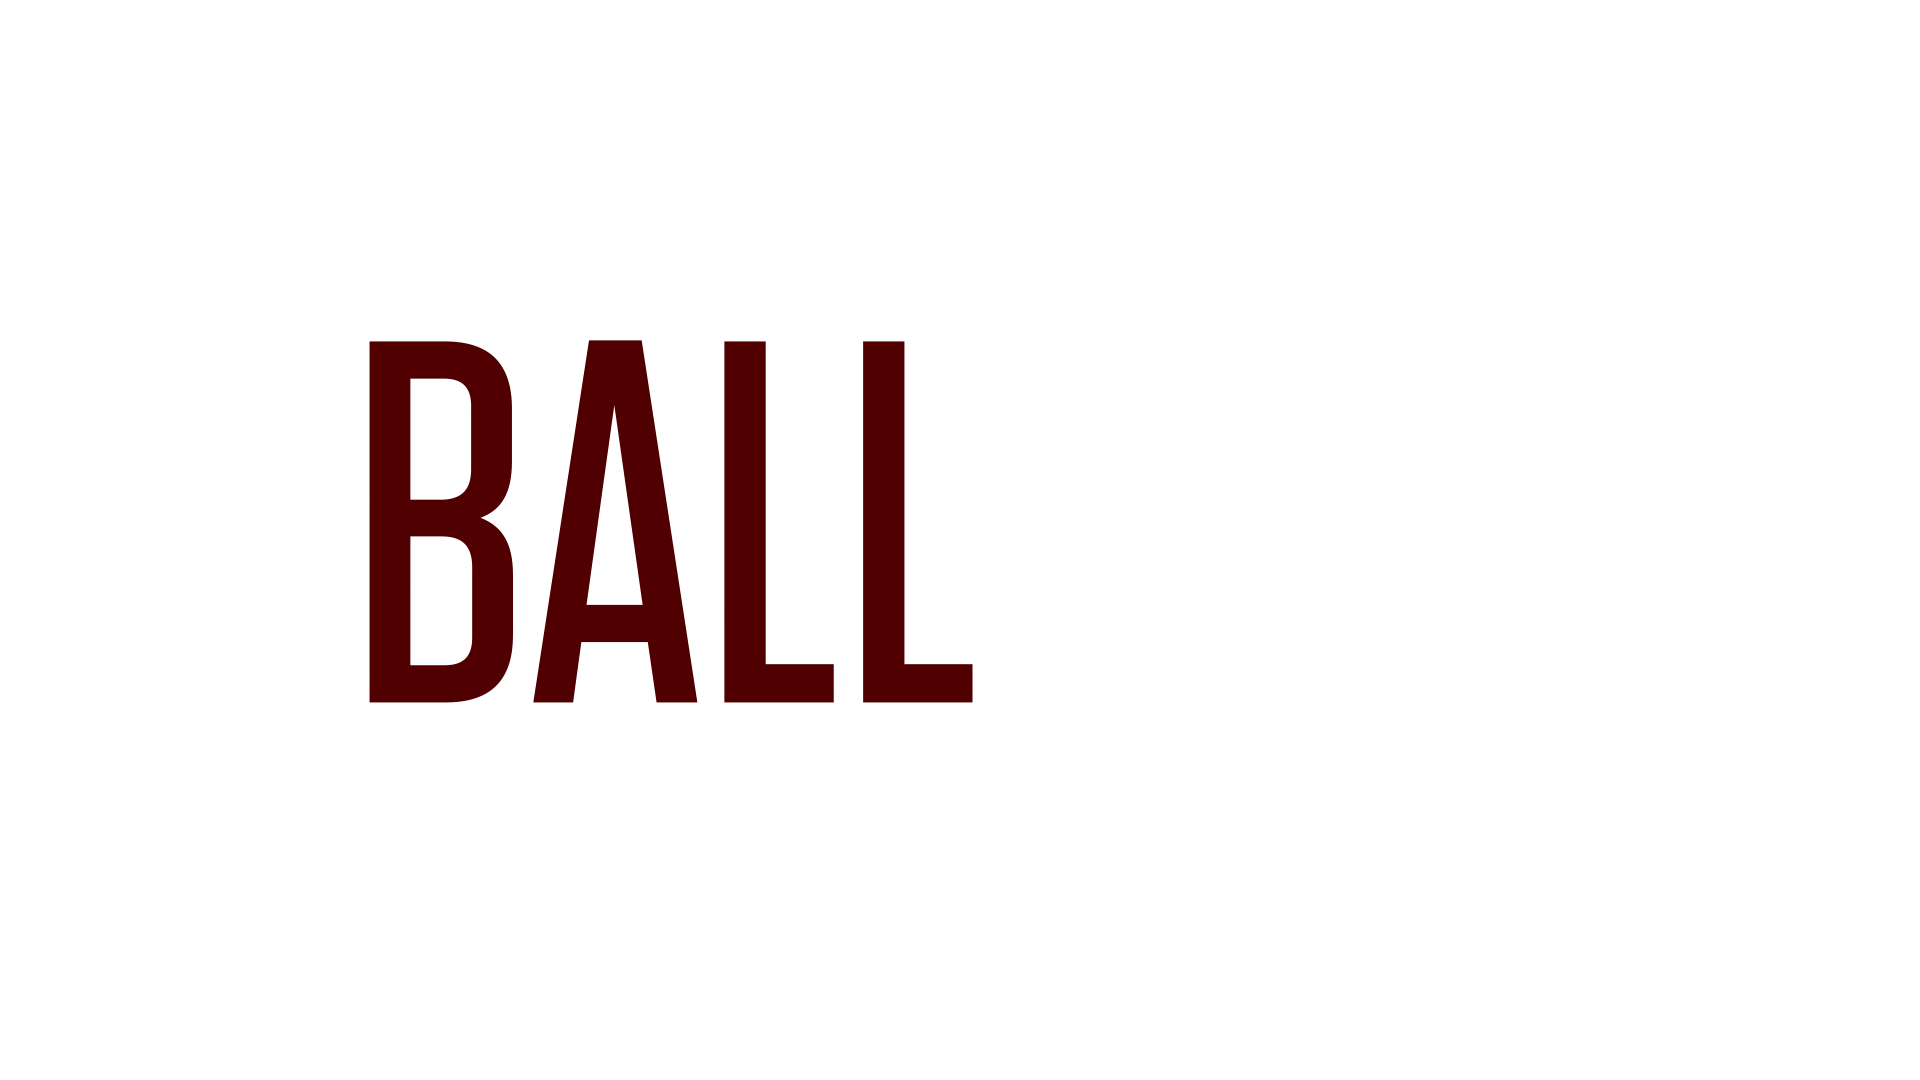 College Baseball Sticker by Texas A&M University